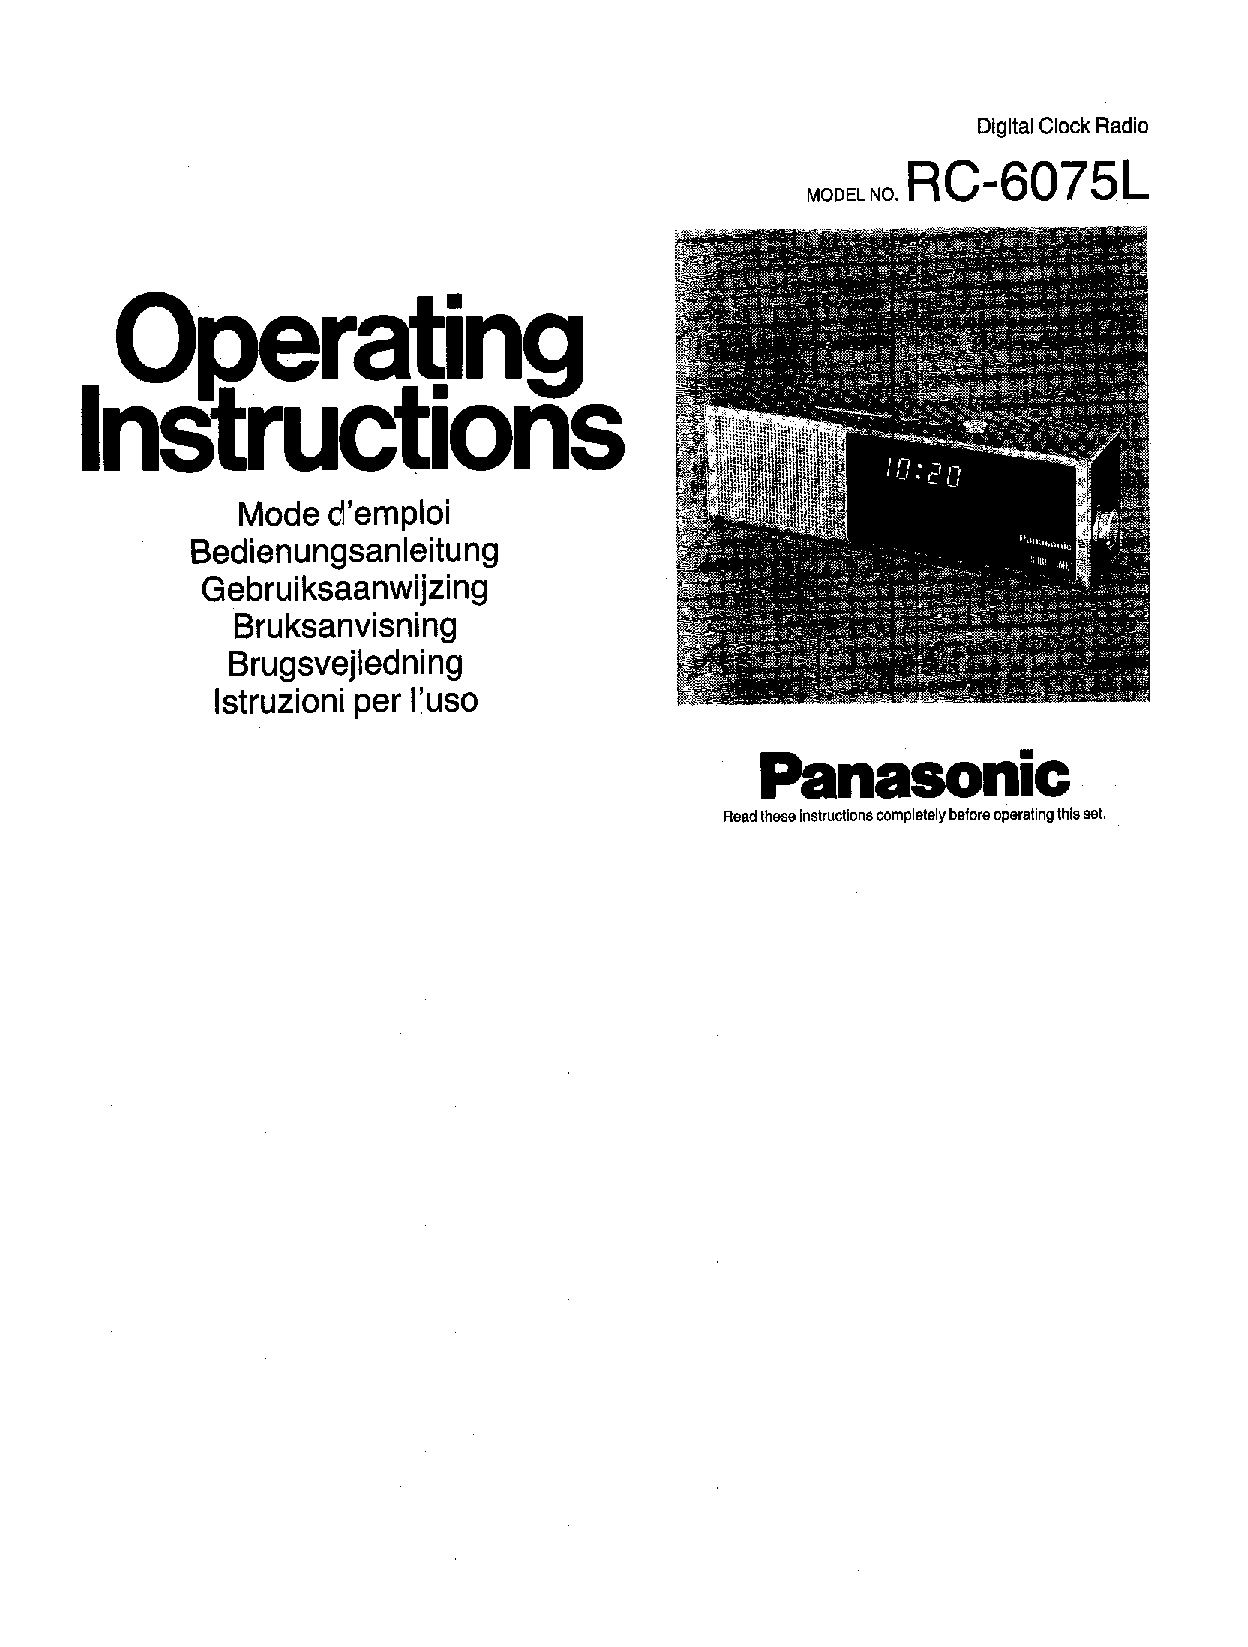 Panasonic RC-6075 User Manual